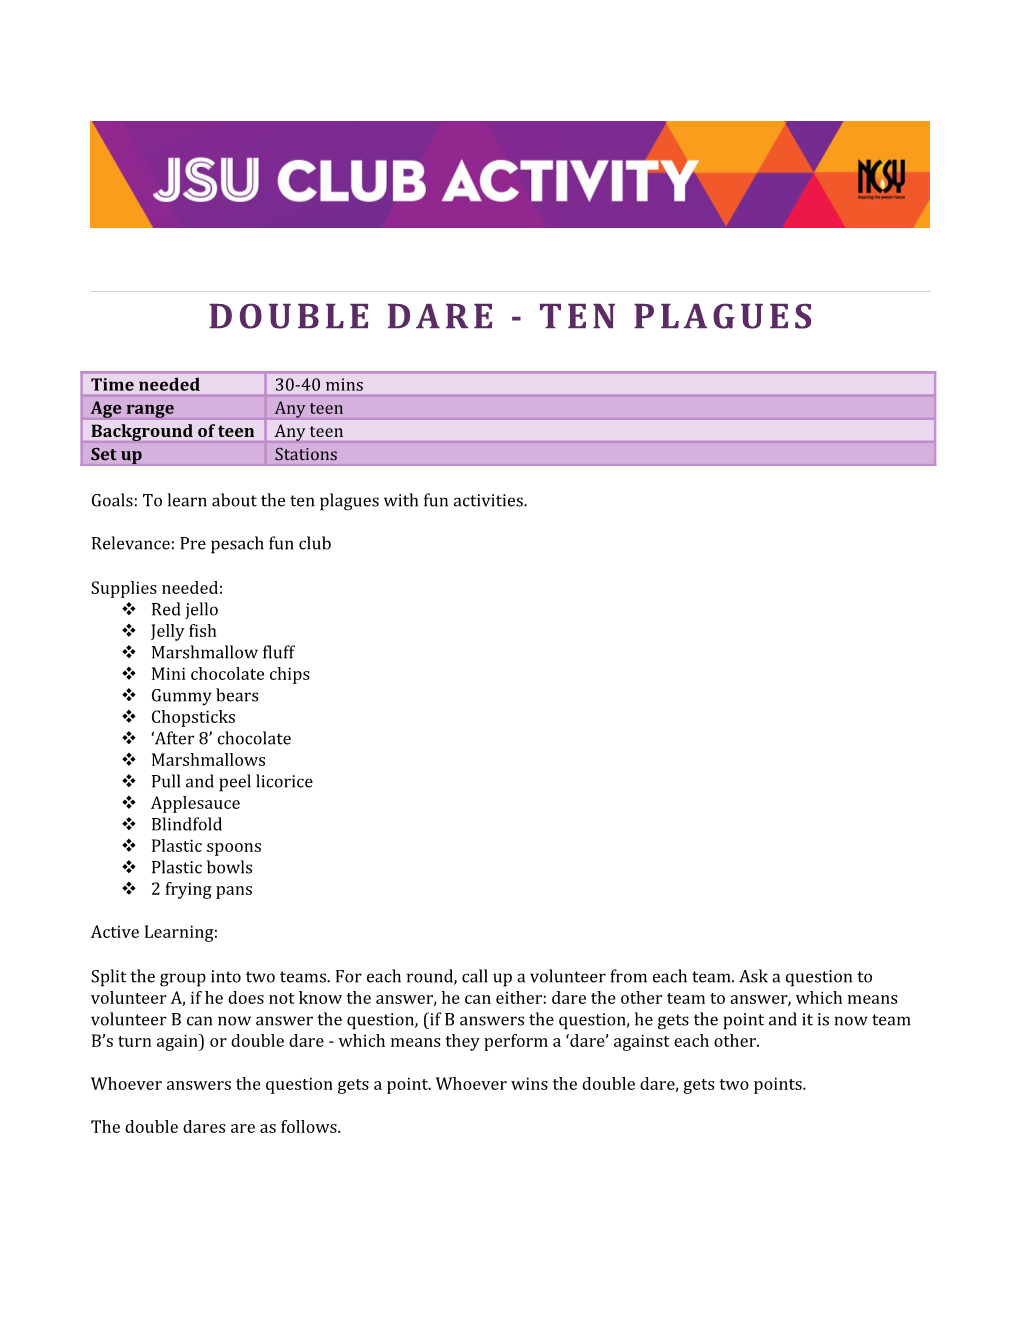 Double Dare - Ten Plagues